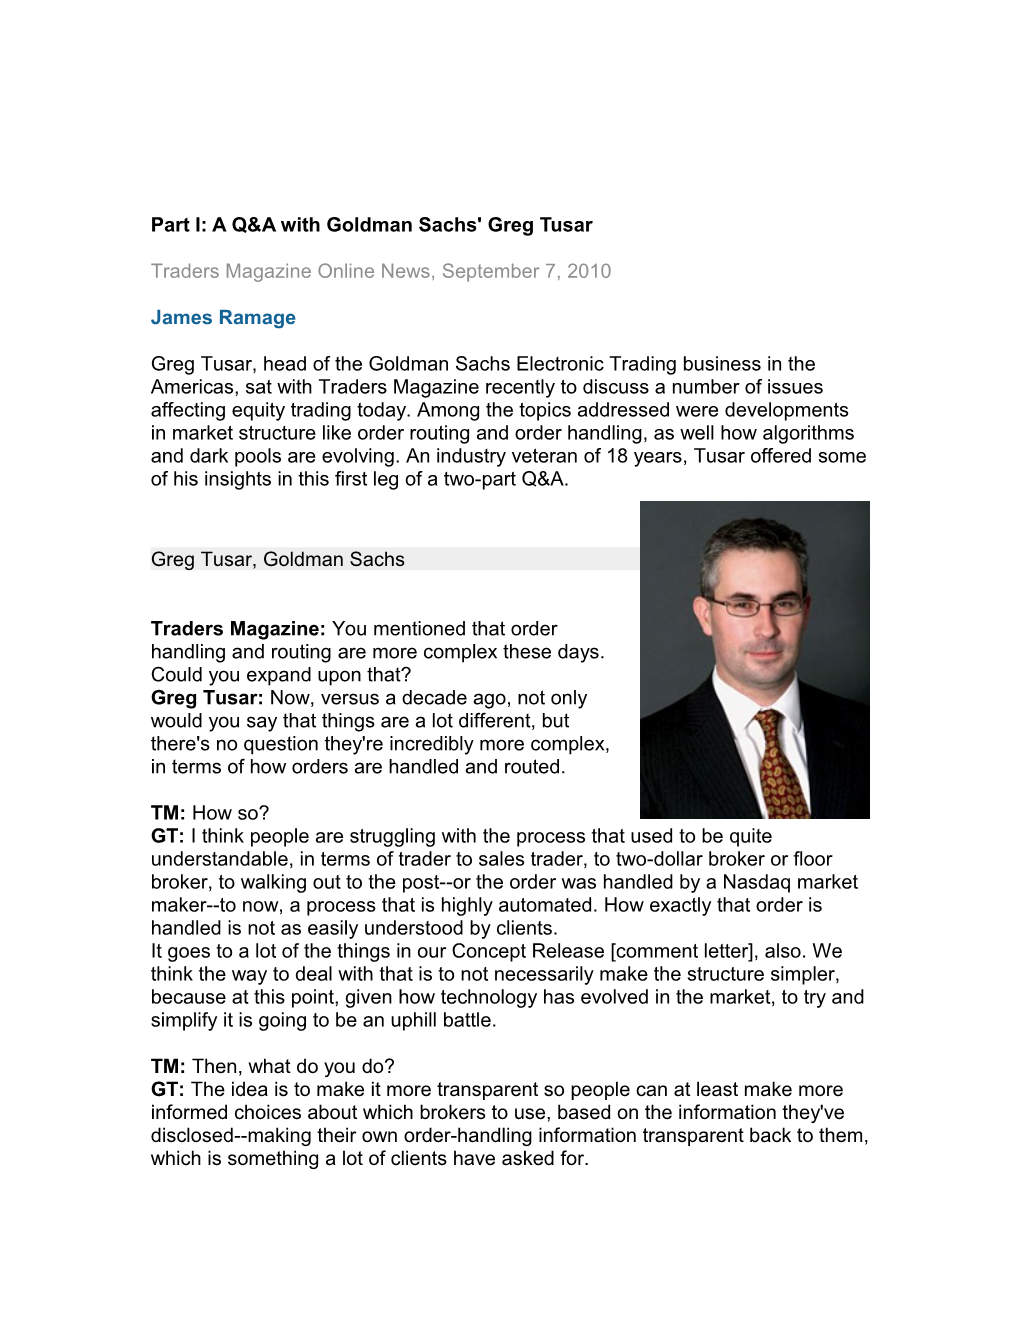 Part I: a Q&A with Goldman Sachs' Greg Tusar